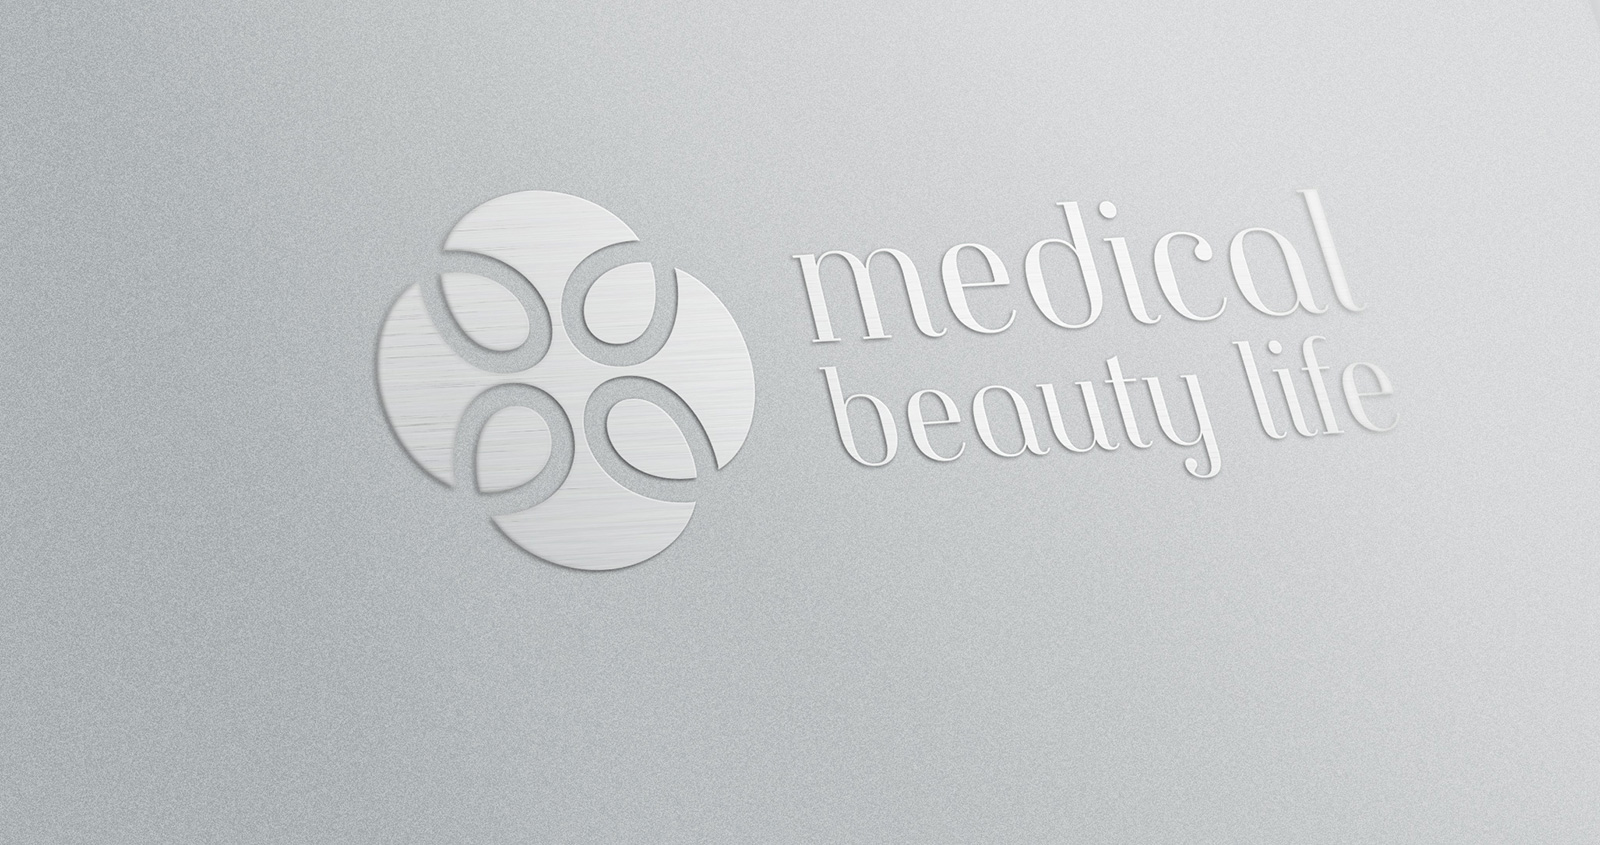 Medical Beauty Life